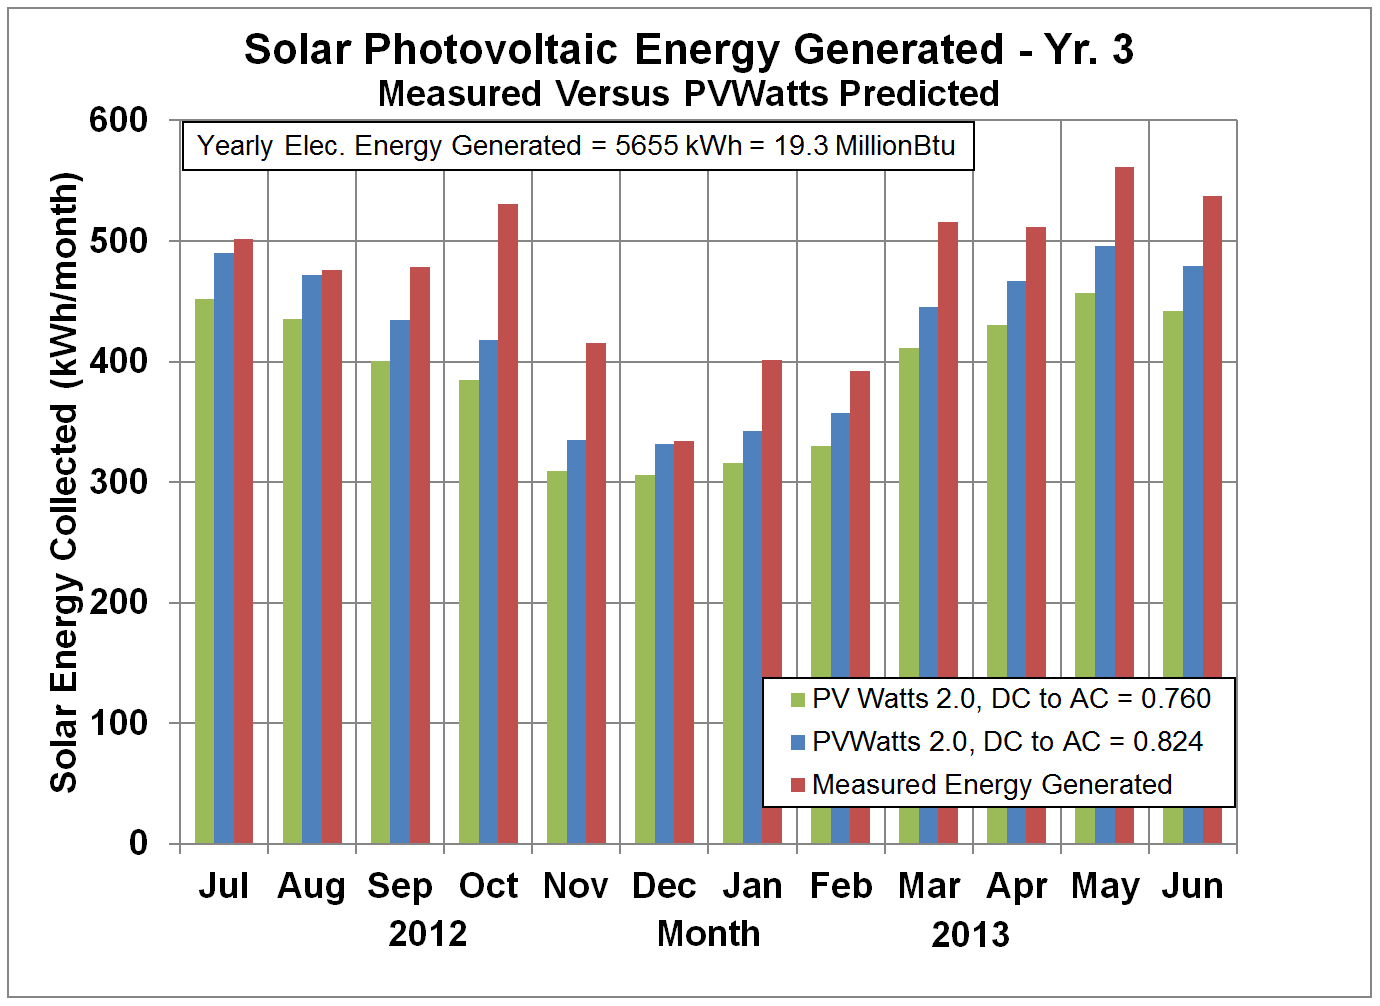 Solar PV Energy Predicted versus Generated - Yr. 3